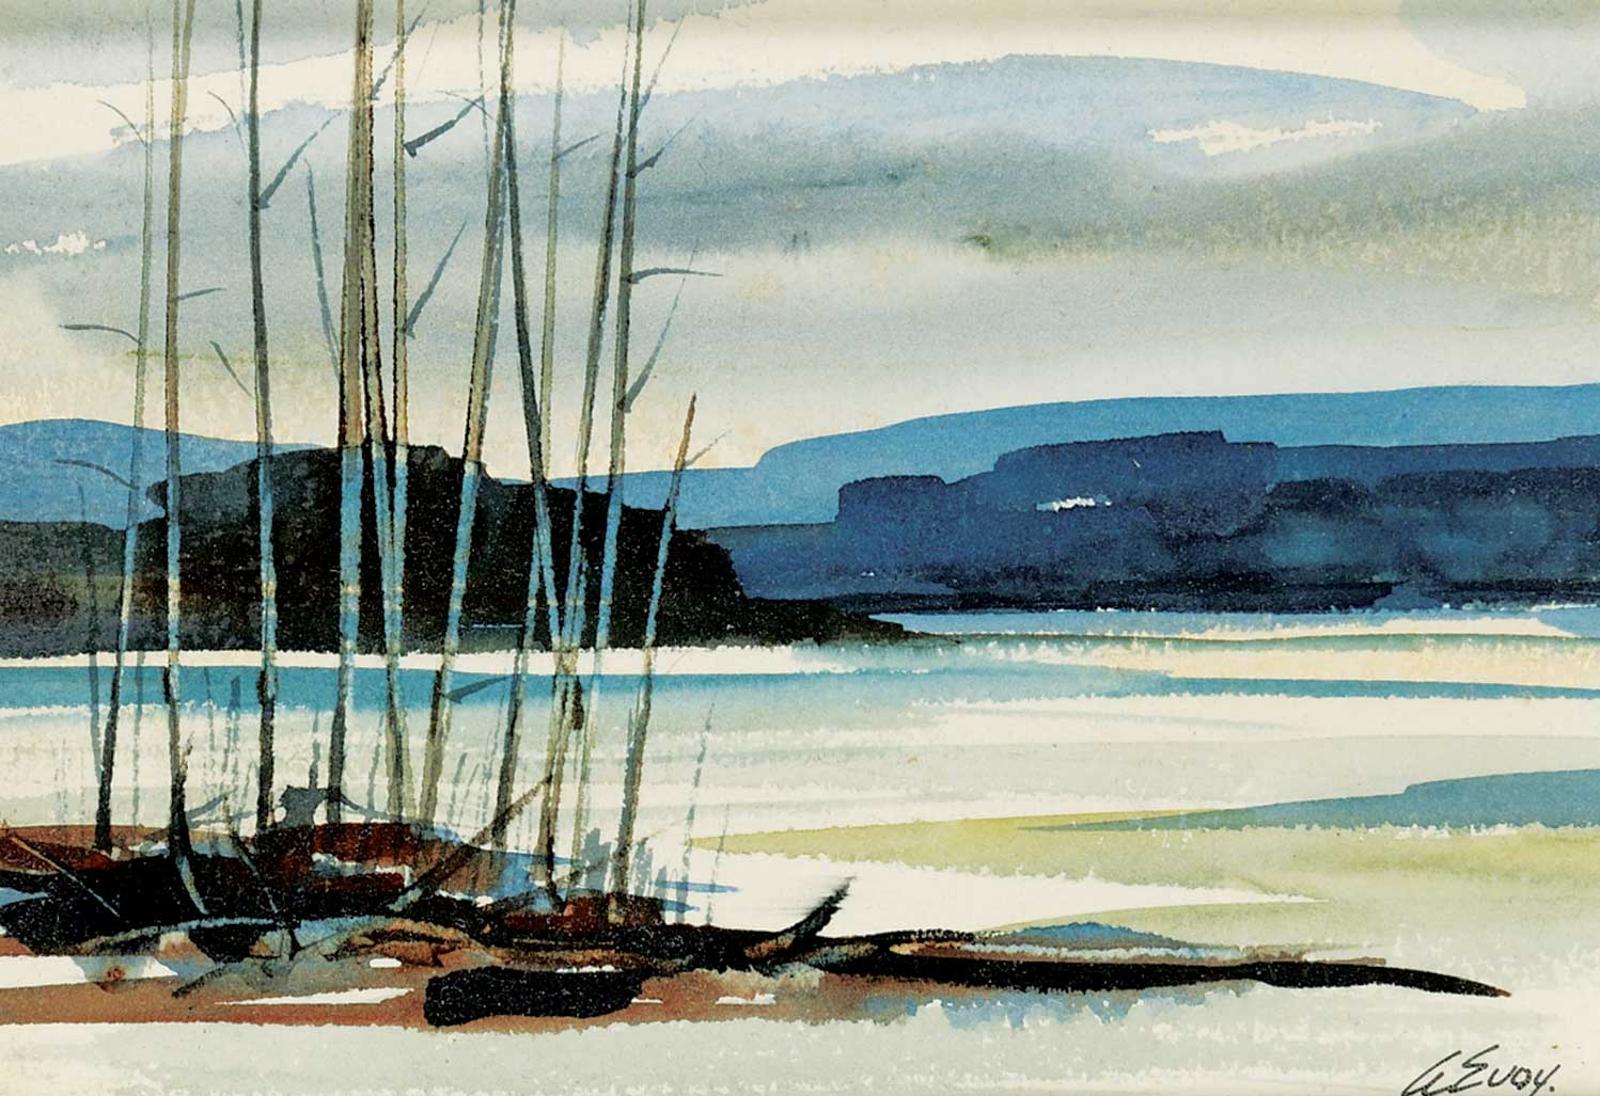 George Arthur [Art] Evoy - Untitled - Serene Bay